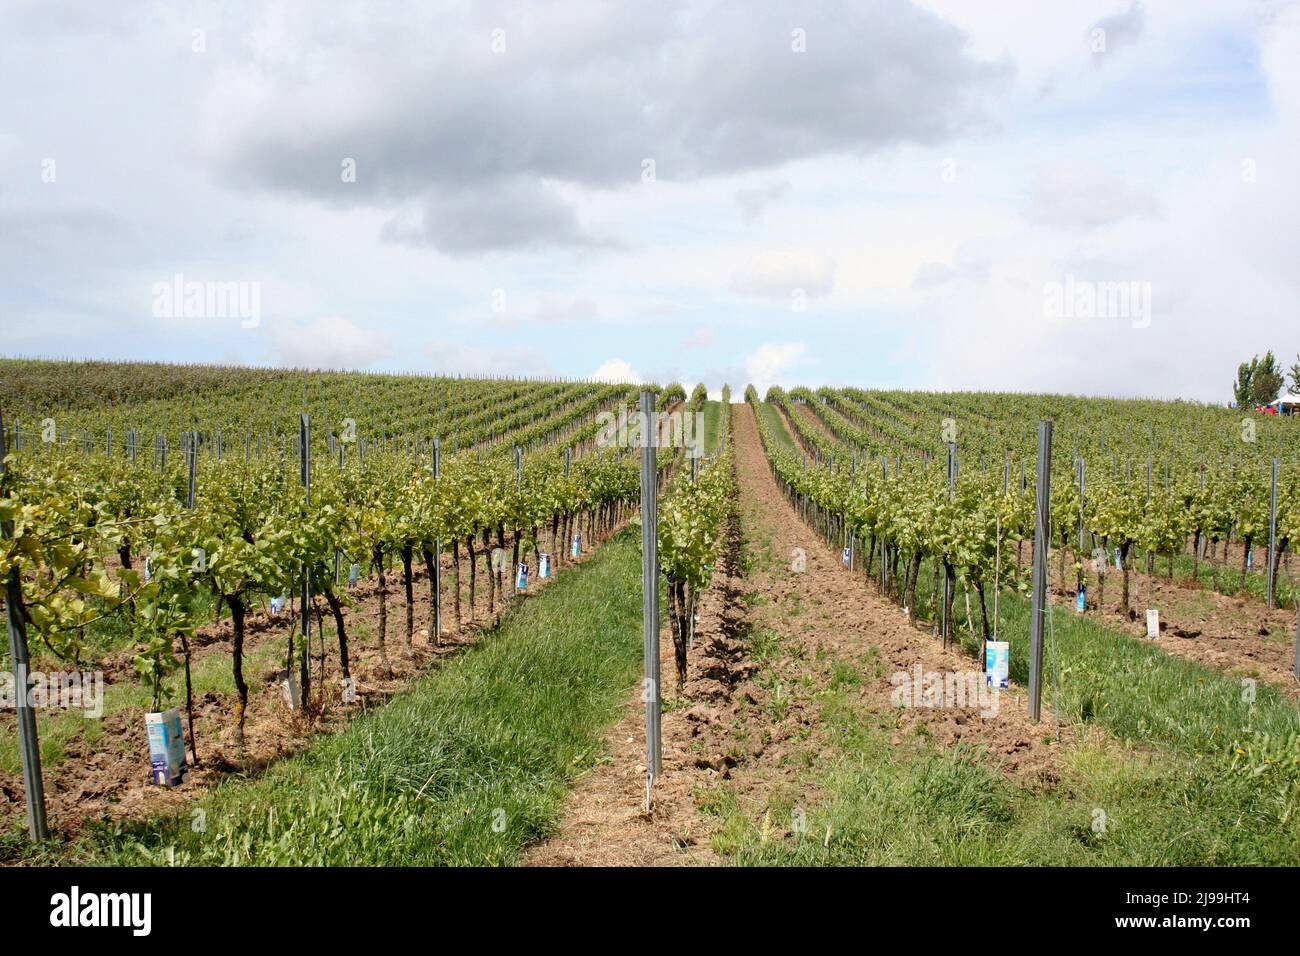 Gently sloping hill of vineyards, Herxheim am berg, Germany. Stock Photo